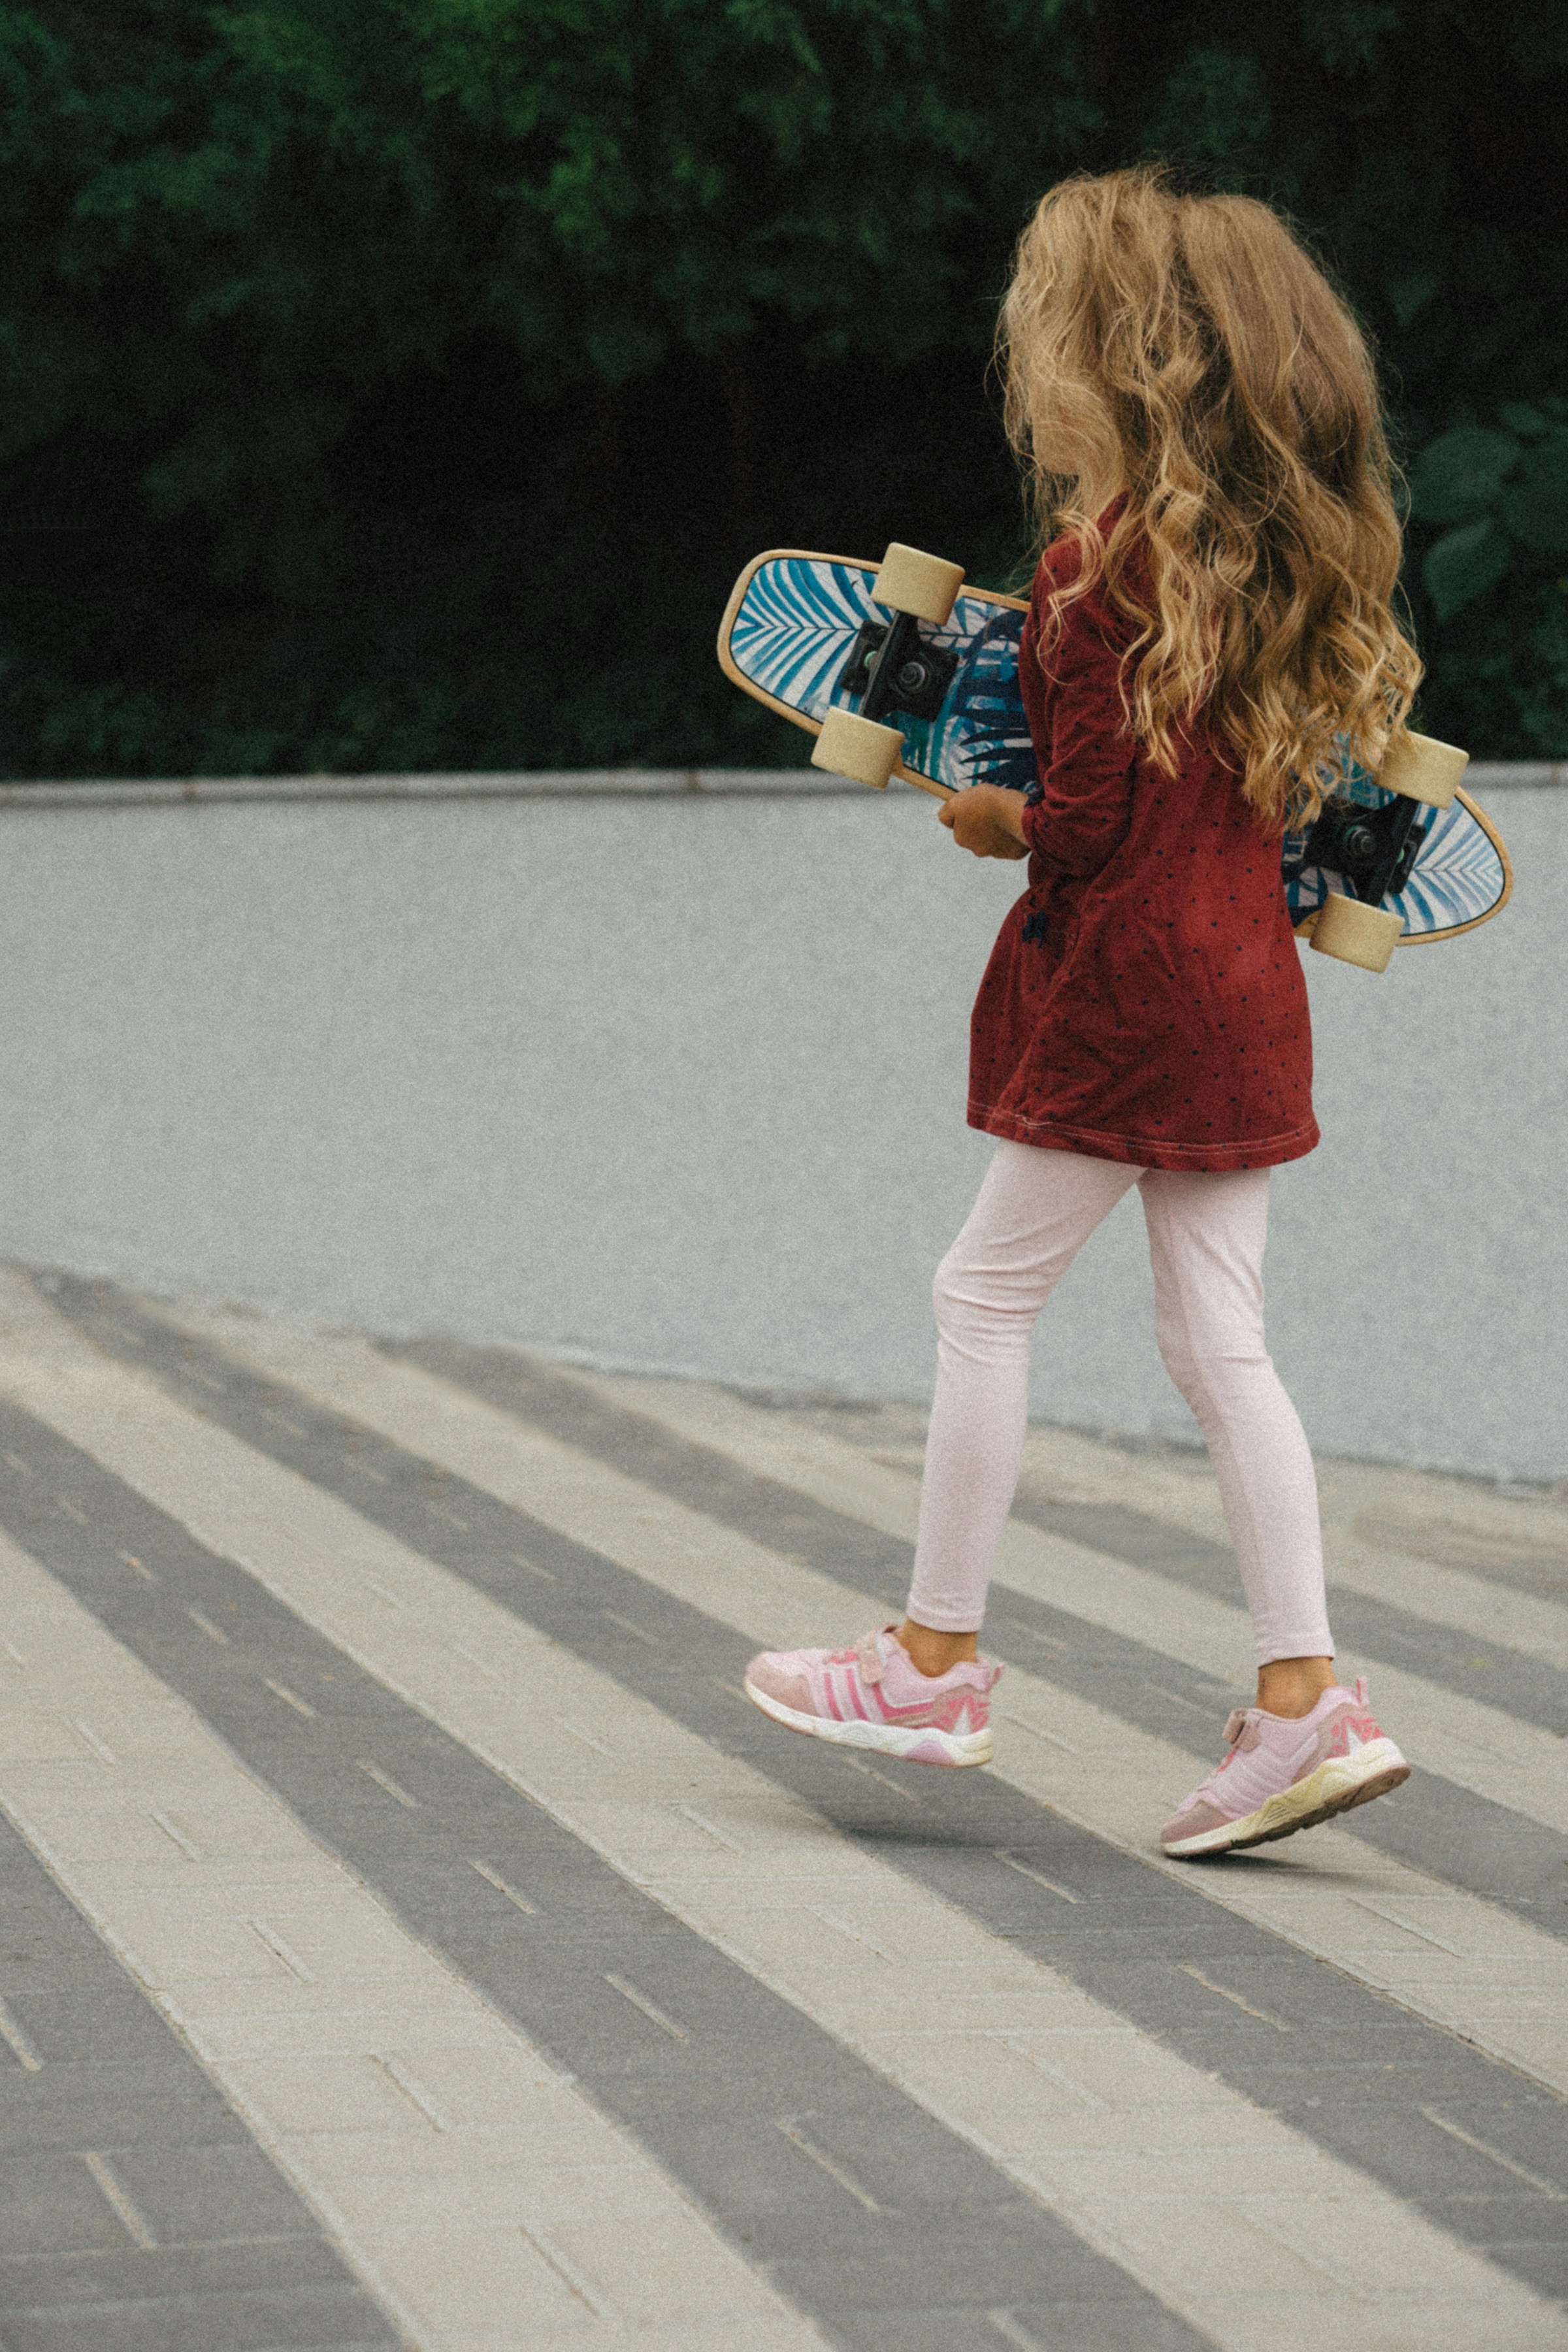 A little girl holding a skateboard | Source: Unsplash